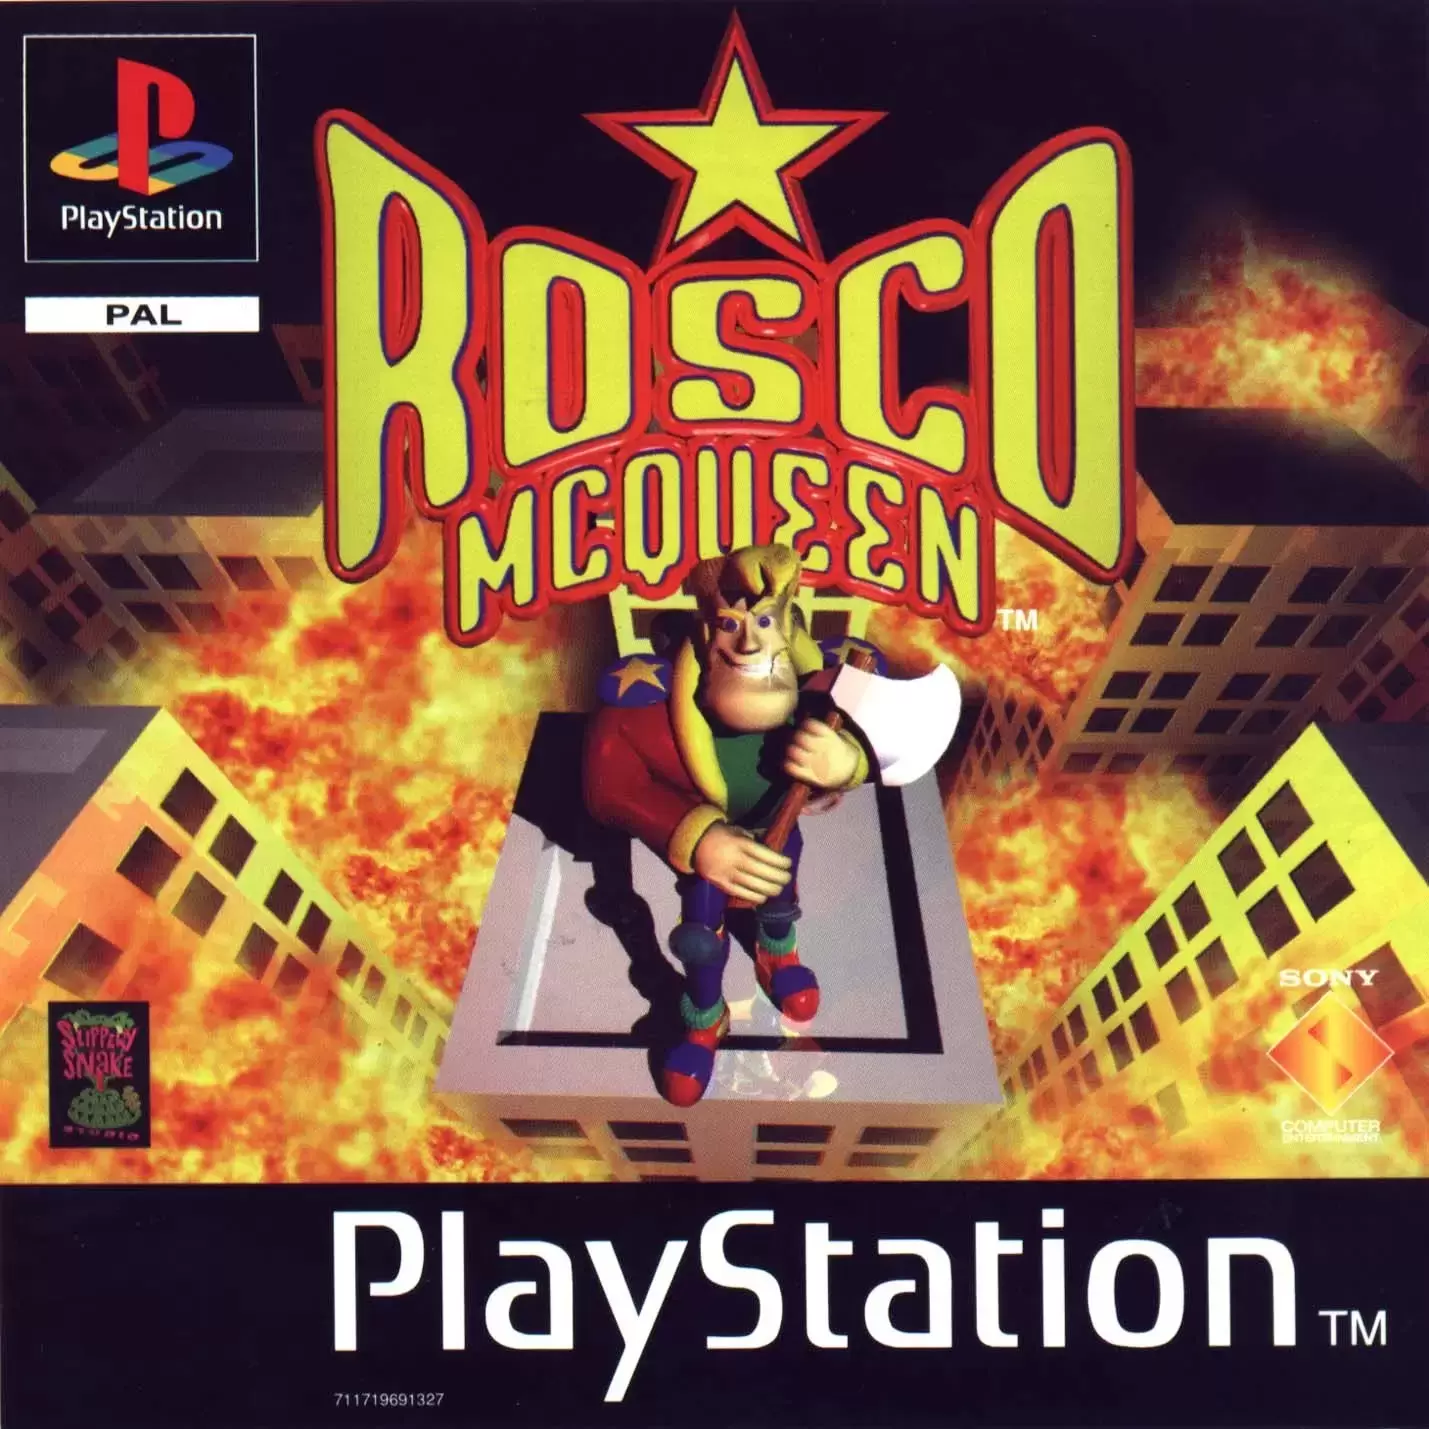 Playstation games - Rosco Mc Queen